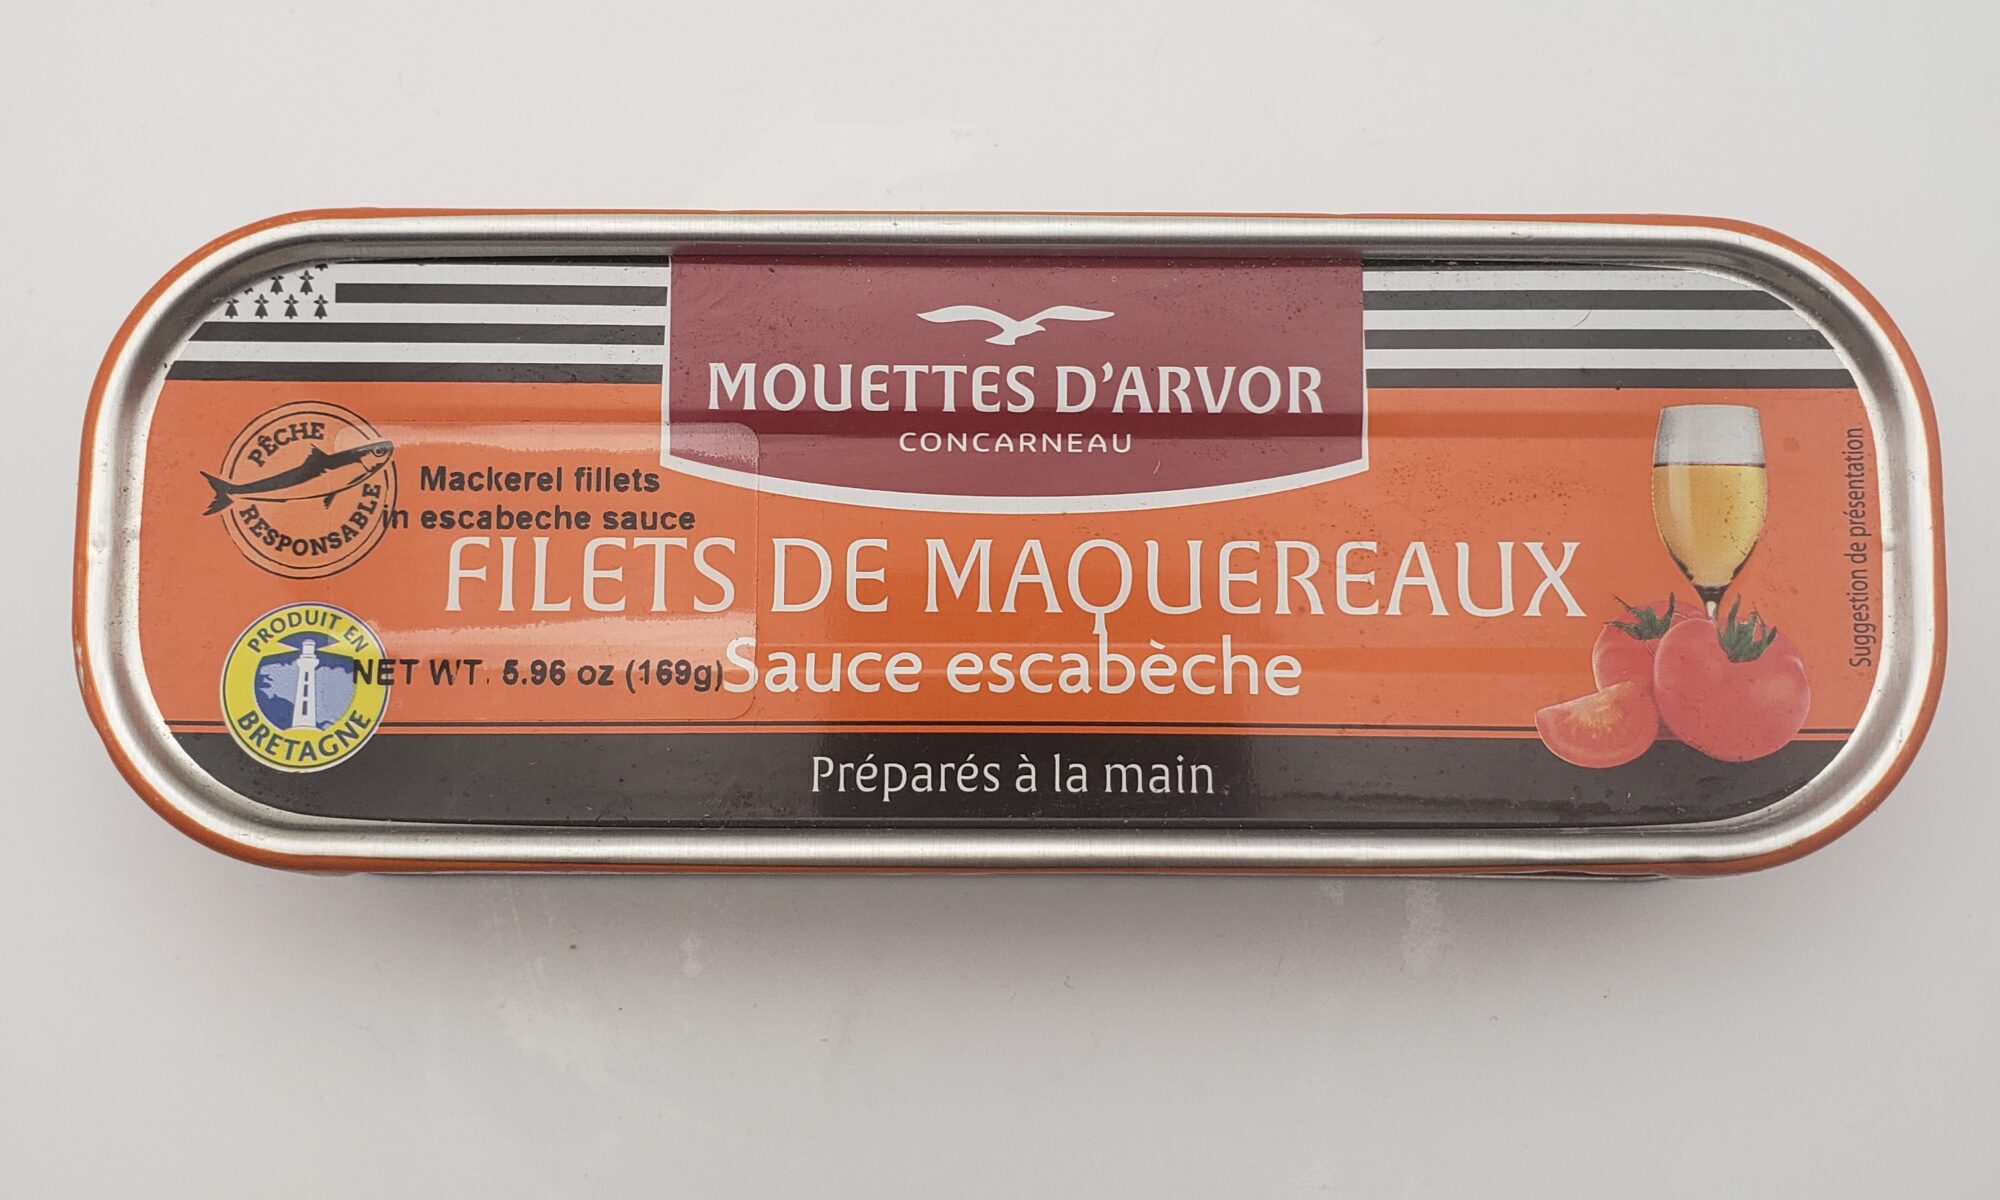 Image of Mouettes d'arvor mackerel in escabeche